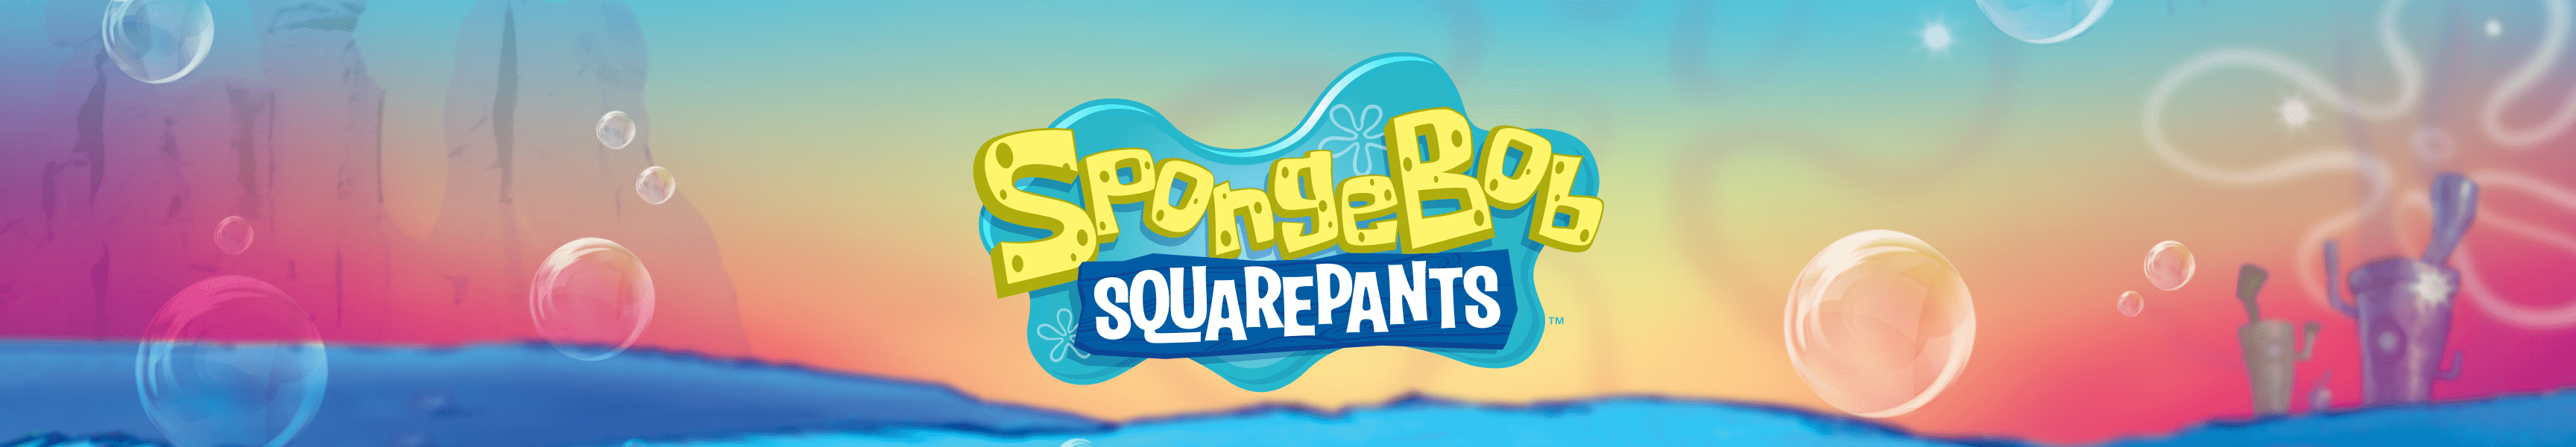 SpongeBob SquarePants 20th Anniversary